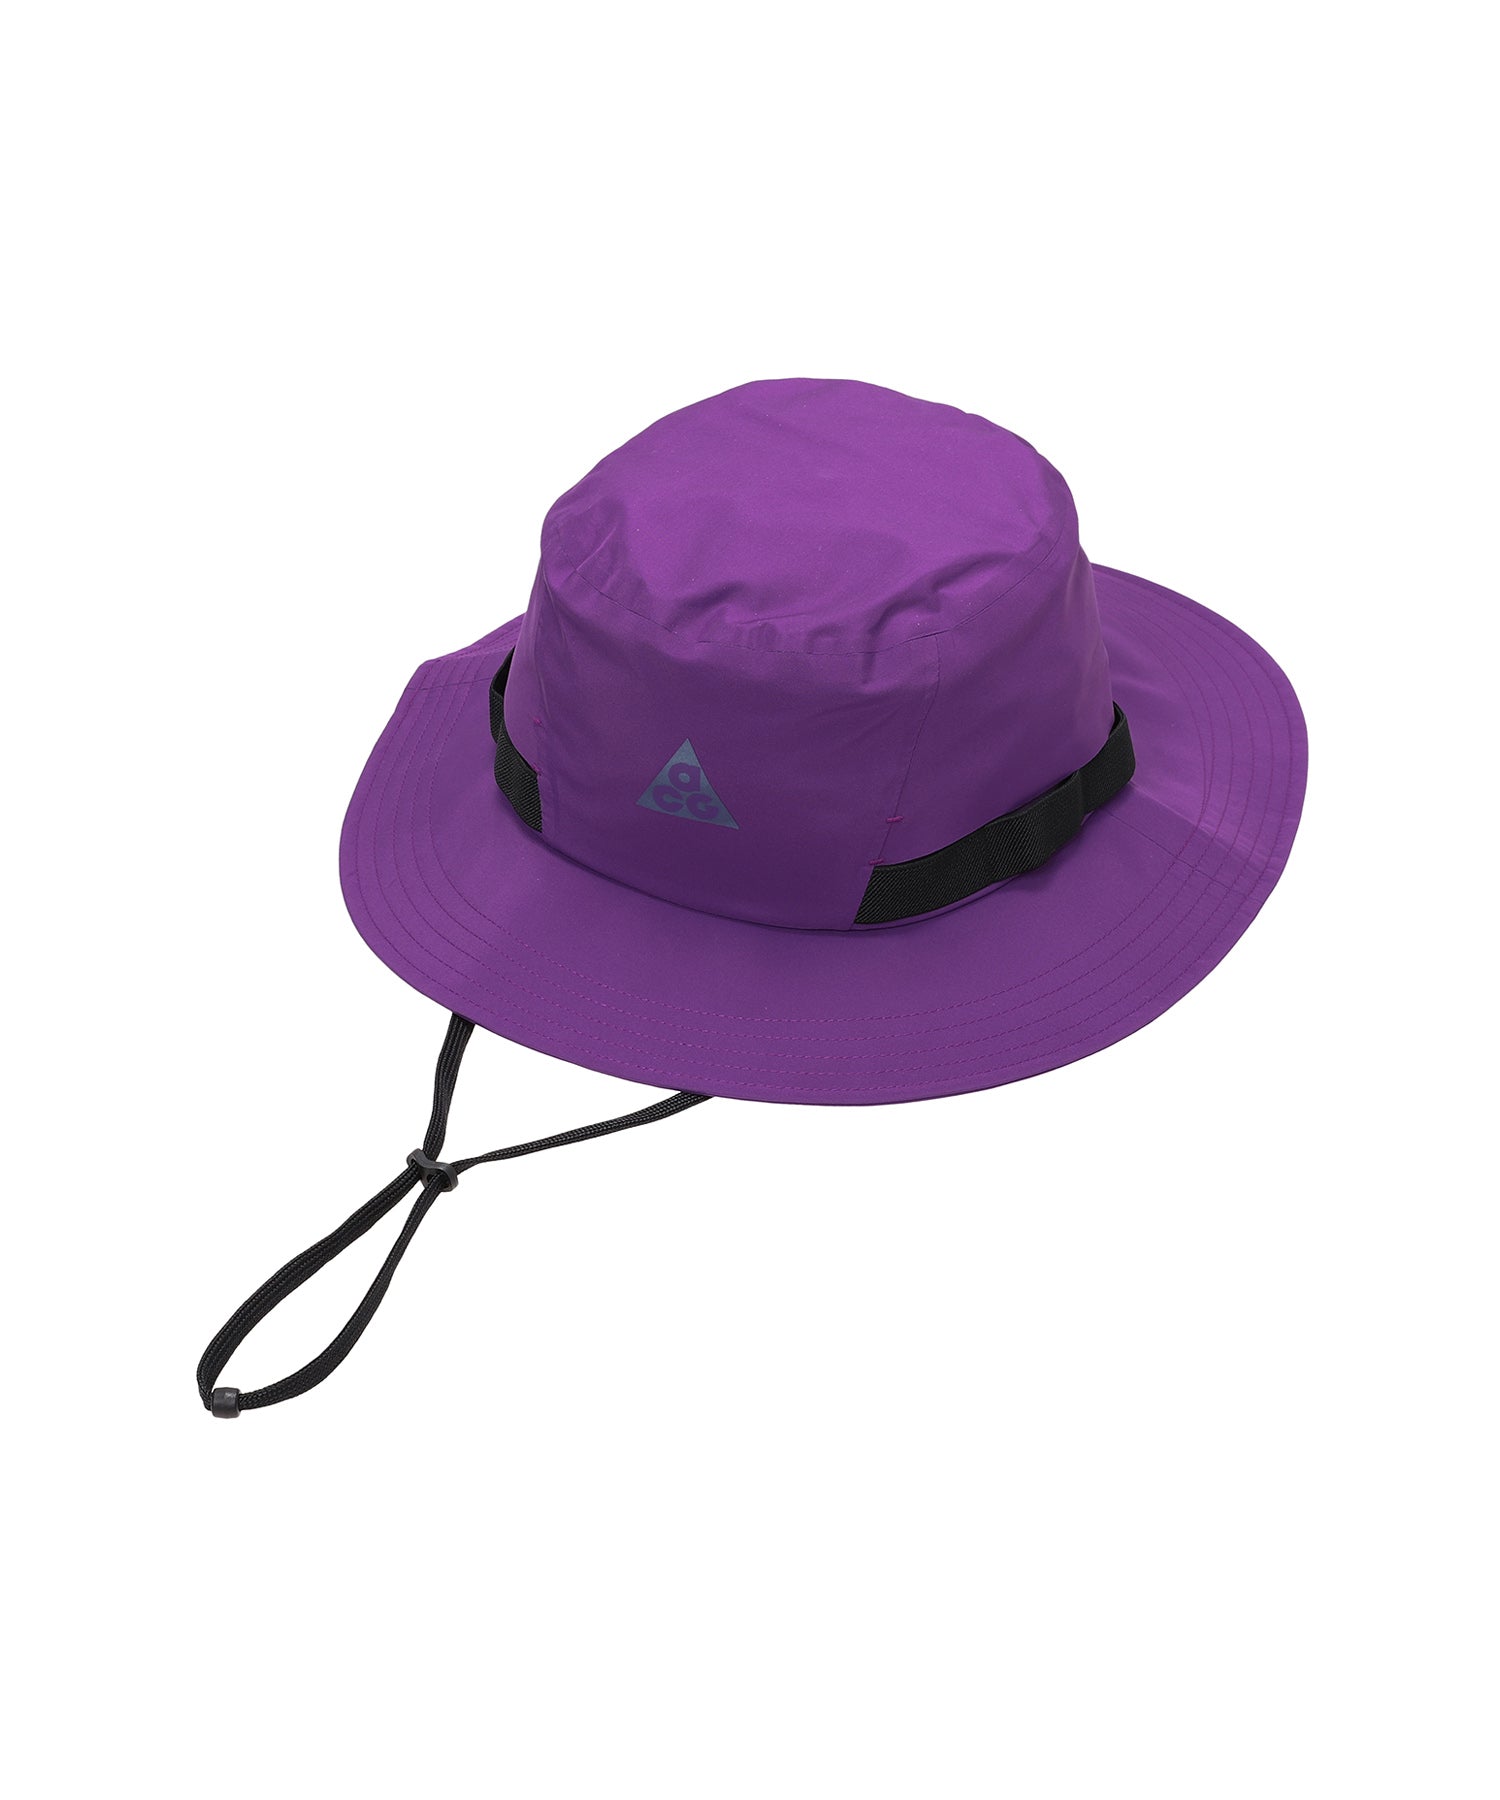 ACG Apex Wb Bucket Hat - NIKE (ナイキ) - cap (キャップ) | FIGURE 